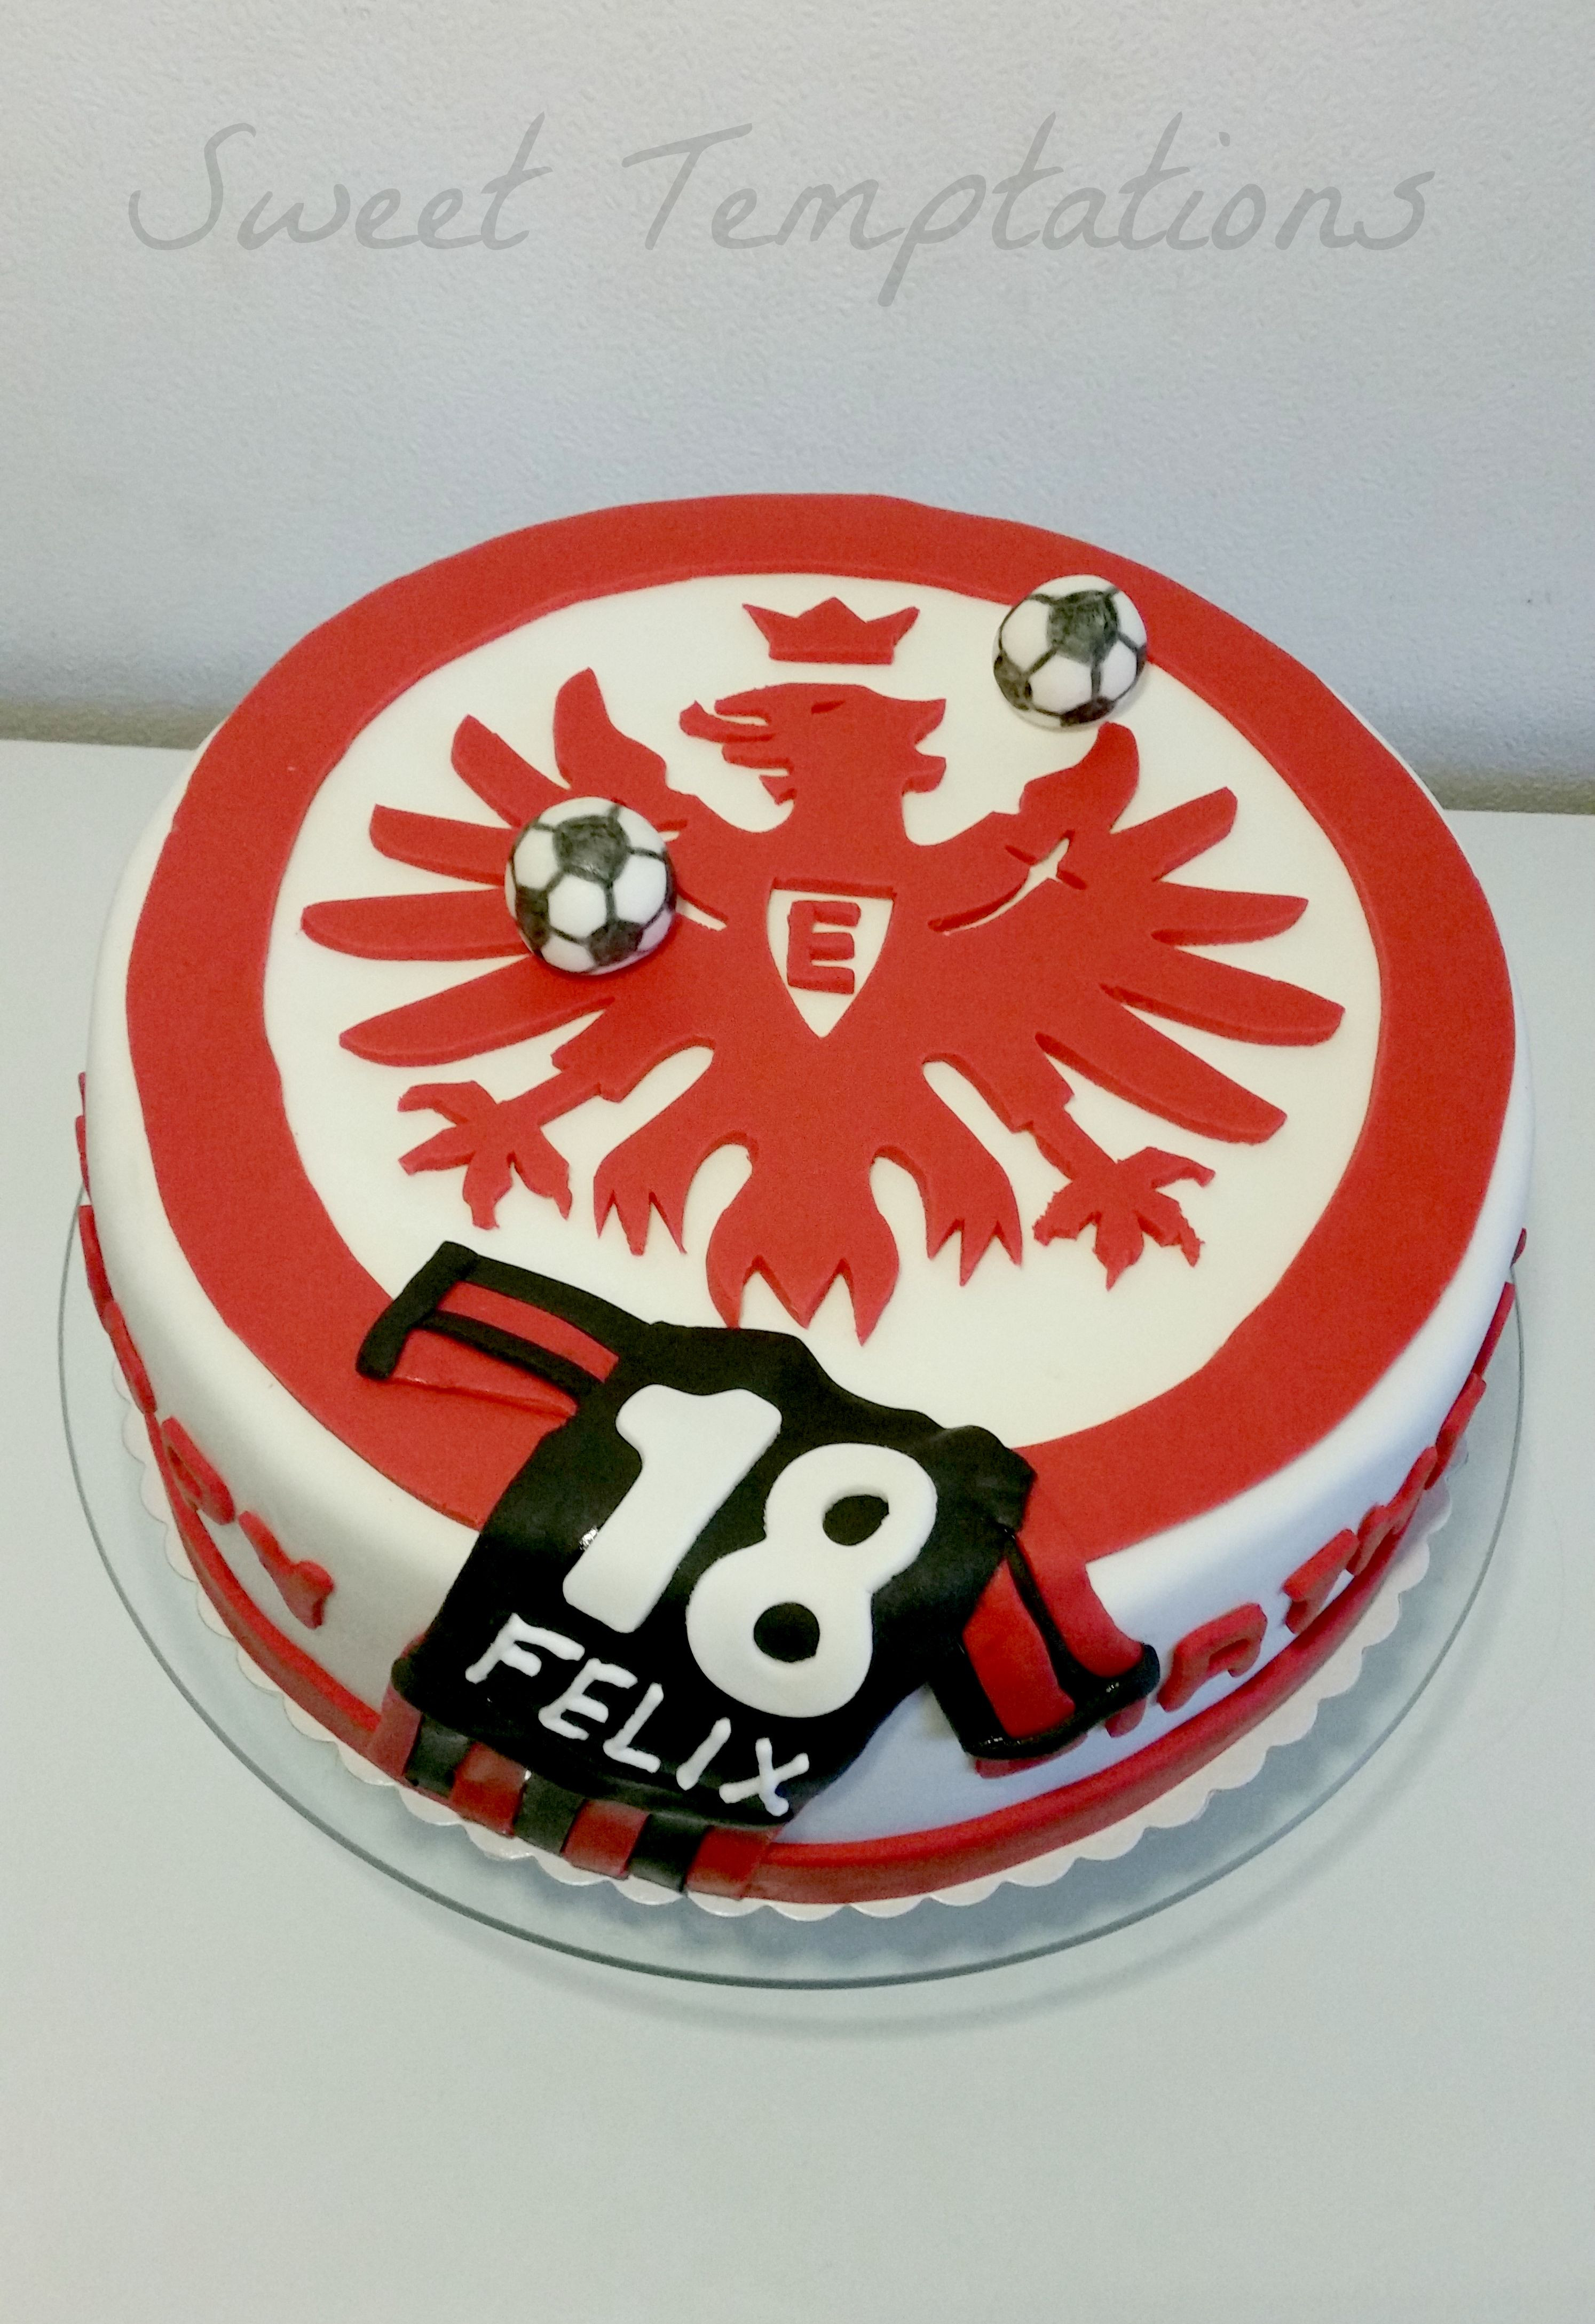 Geschenke Frankfurt
 Soccer Eintracht Frankfurt Cake German soccer cake for a